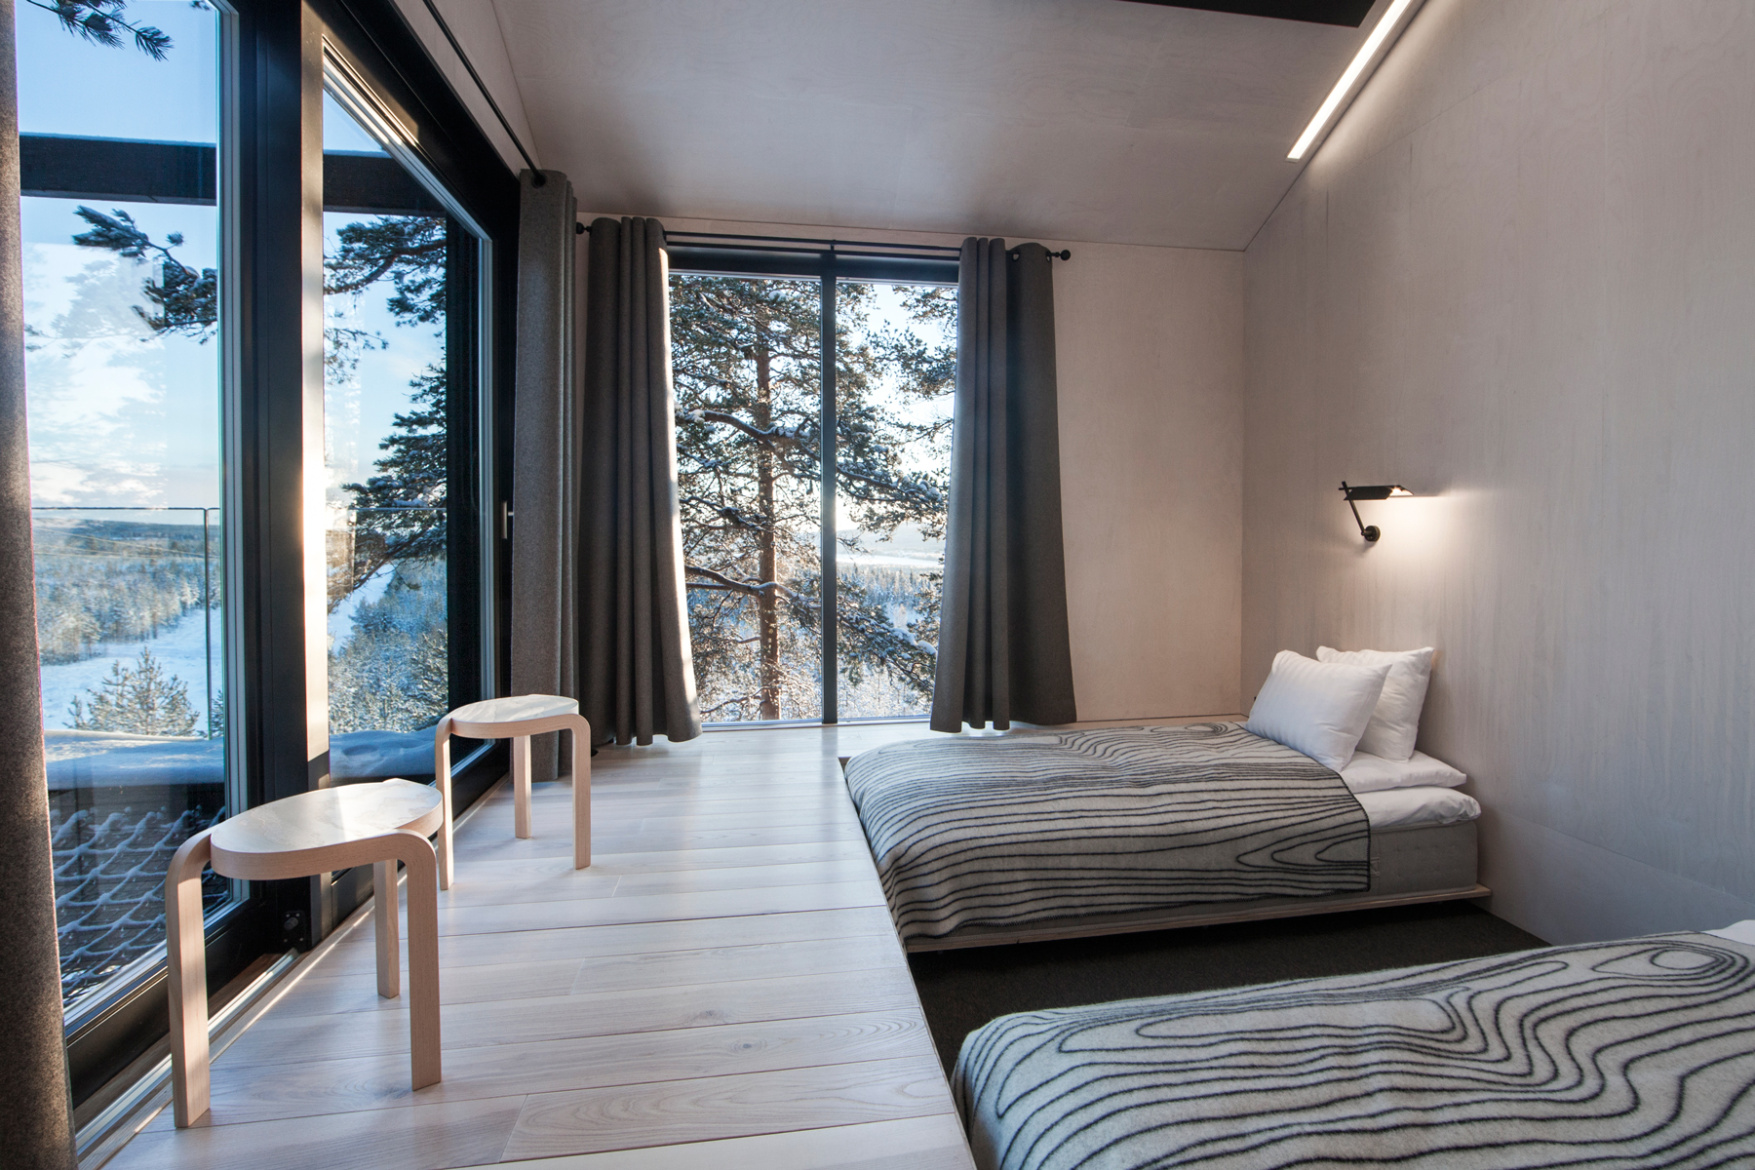 7th-room-treehouse-cabin-snohetta-treehotel-sweden-9